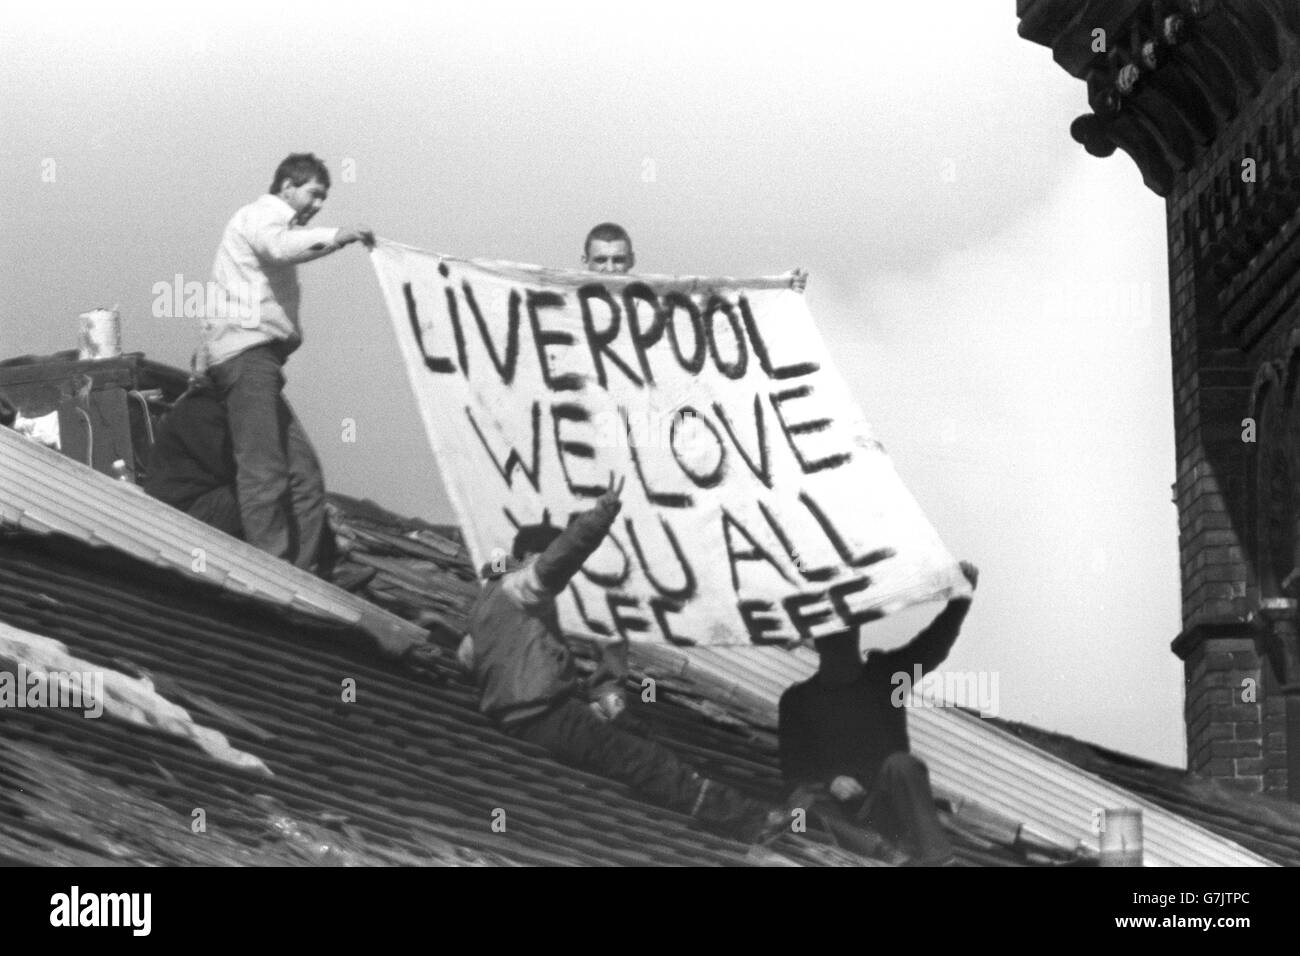 British Crime - Prison - Riots - Strangeways - Manchester - 1990. Rioting inmates on the roof of Strangeways prison proclaim their love of Liverpool's football team. Stock Photo